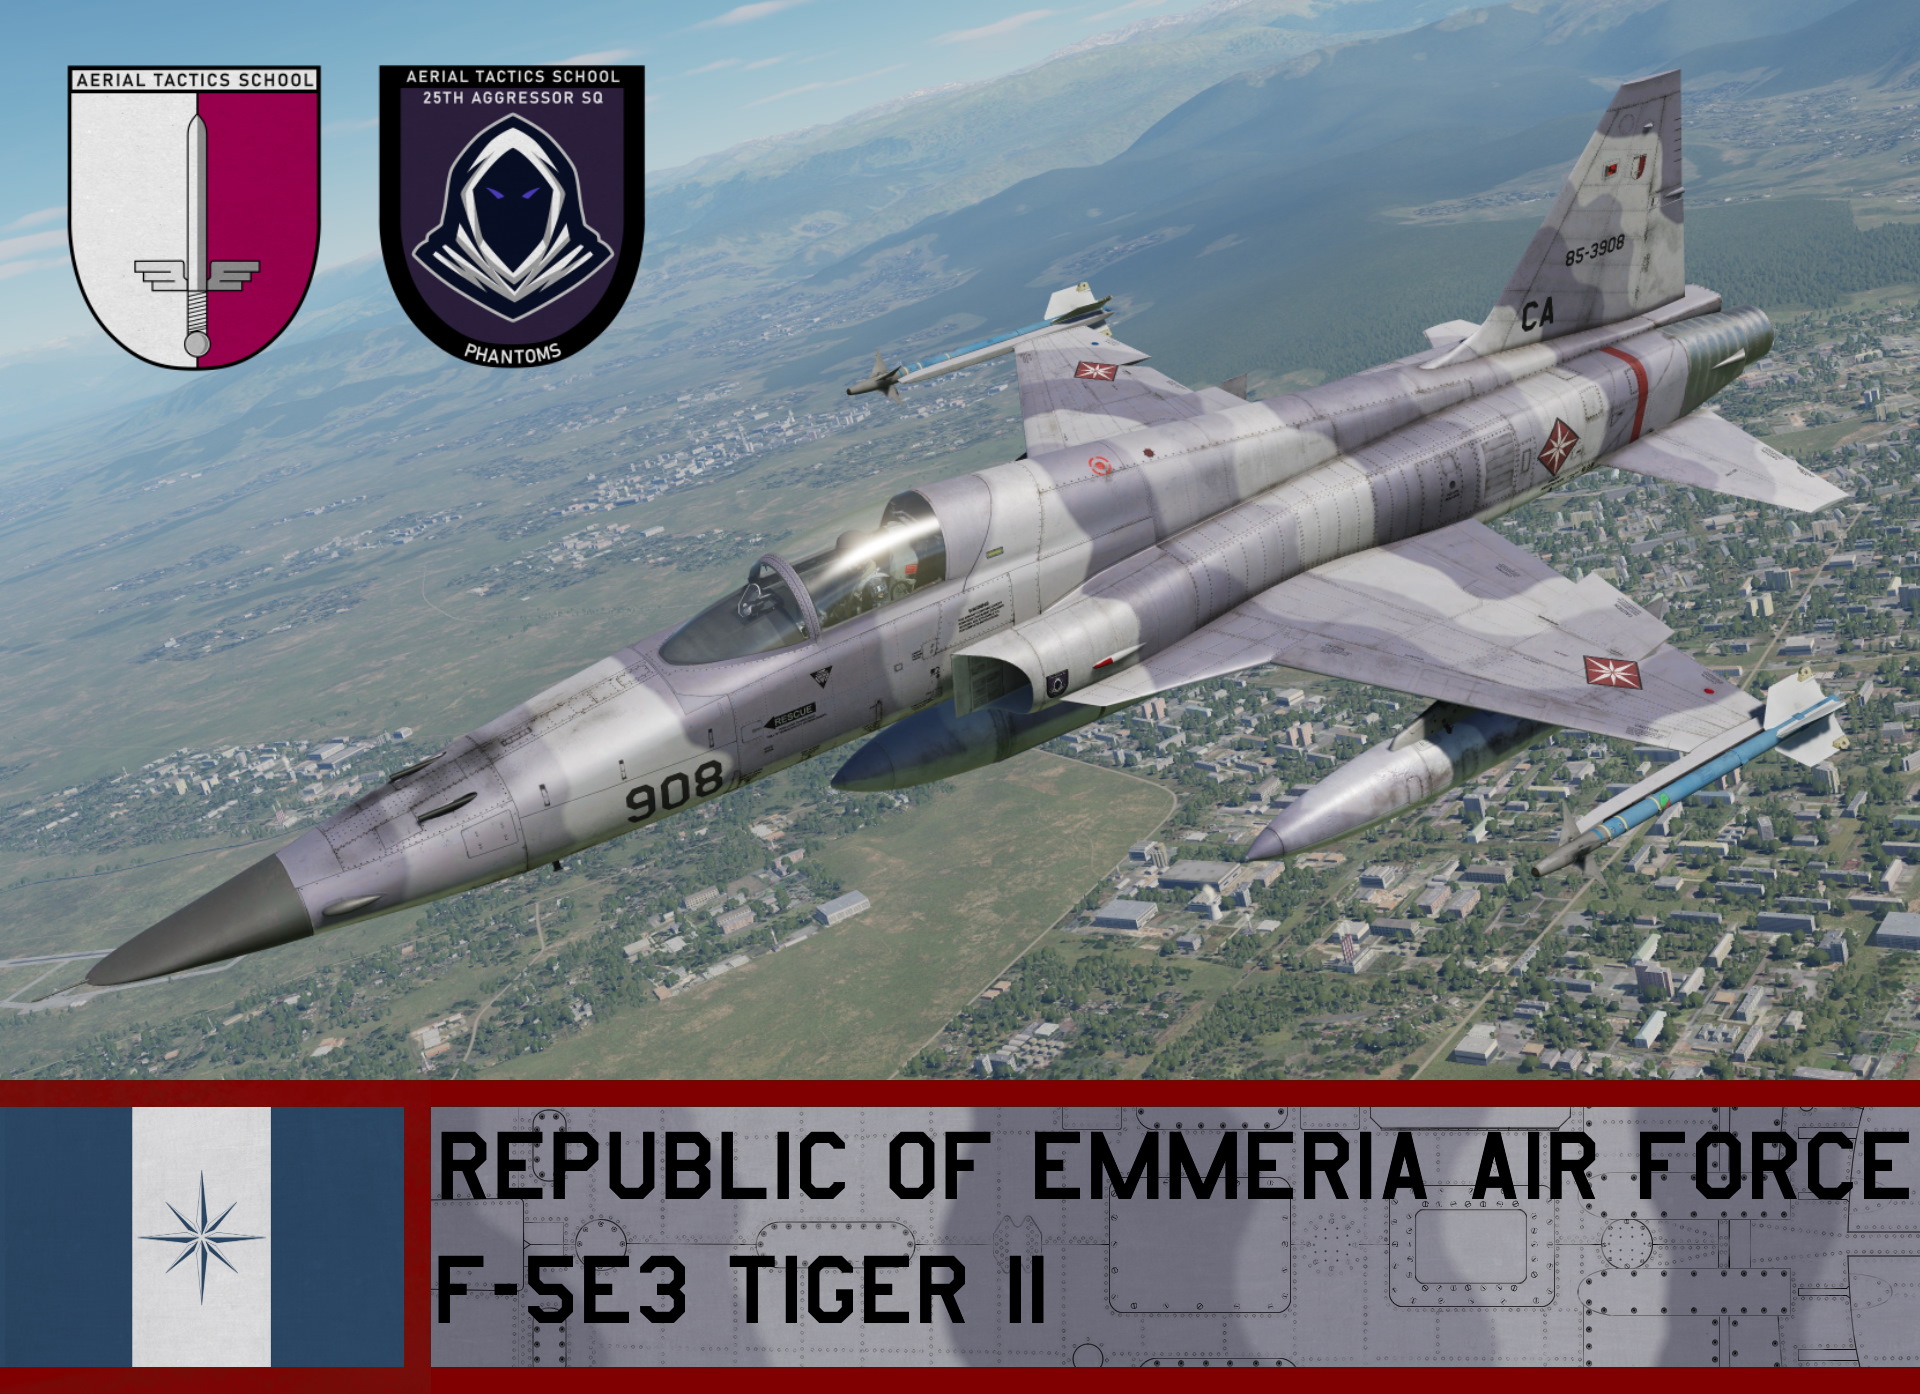 Republic of Emmeria Air Force F-5E3 Tiger II - Ace Combat 6 (25th AGR SQDN)